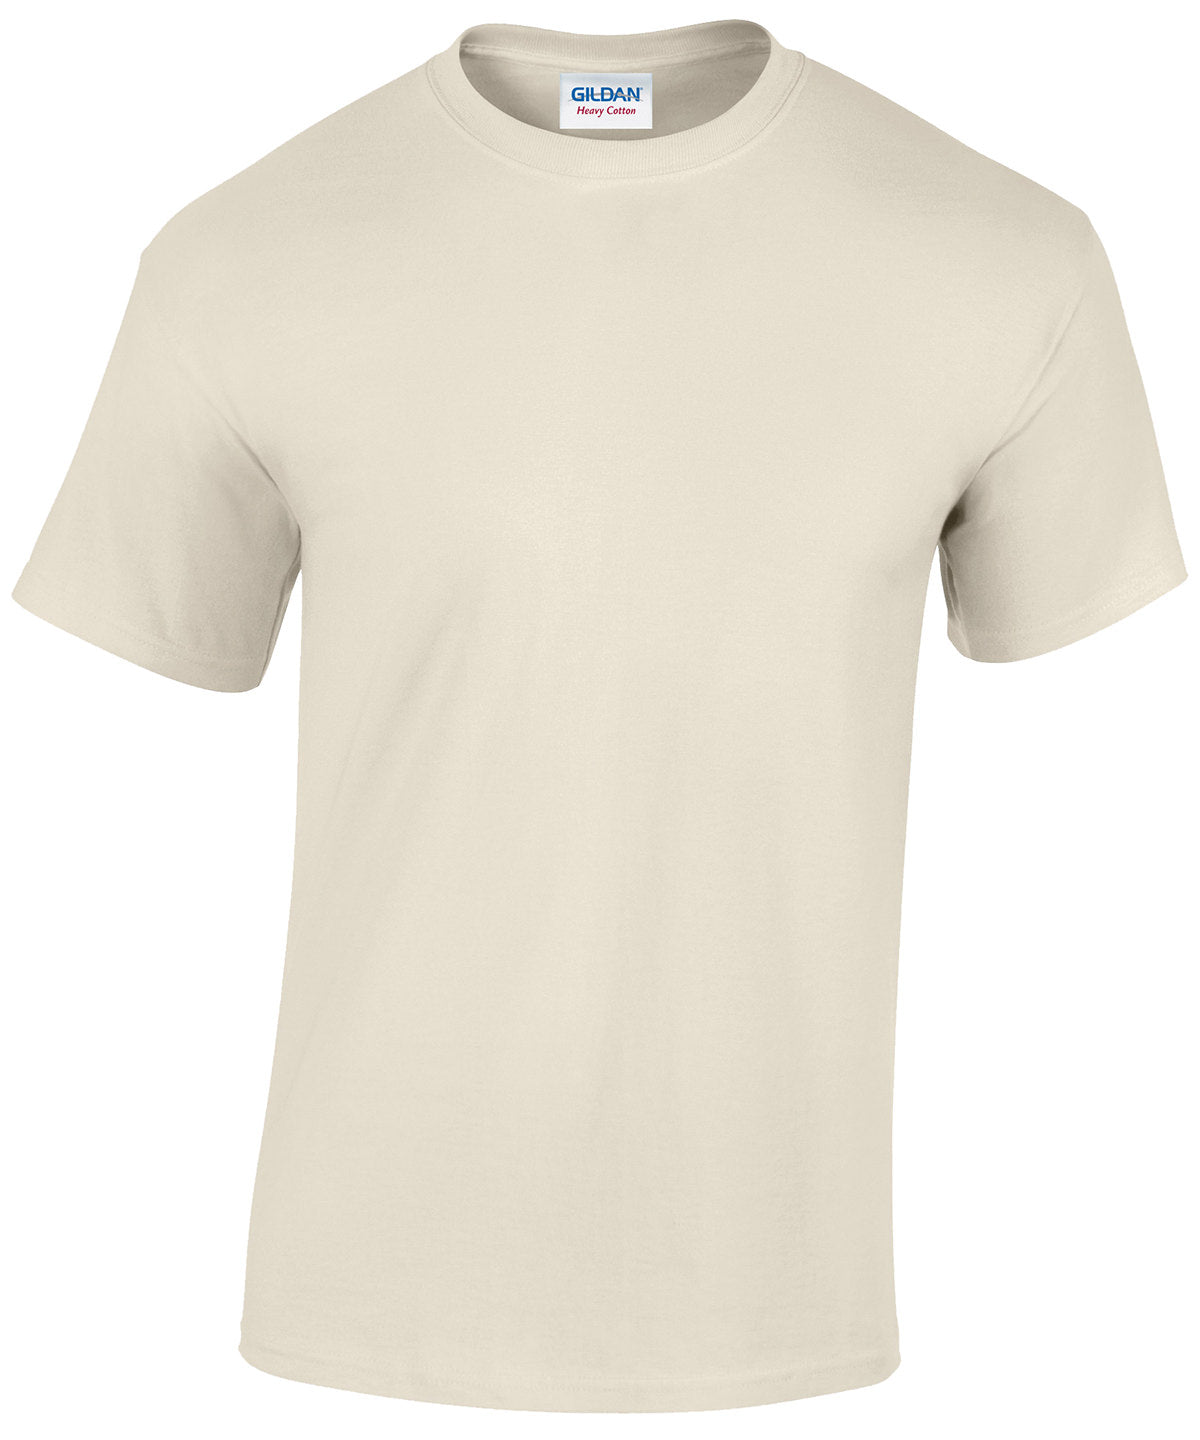 Gildan Heavy Cotton adult t-shirt Natural